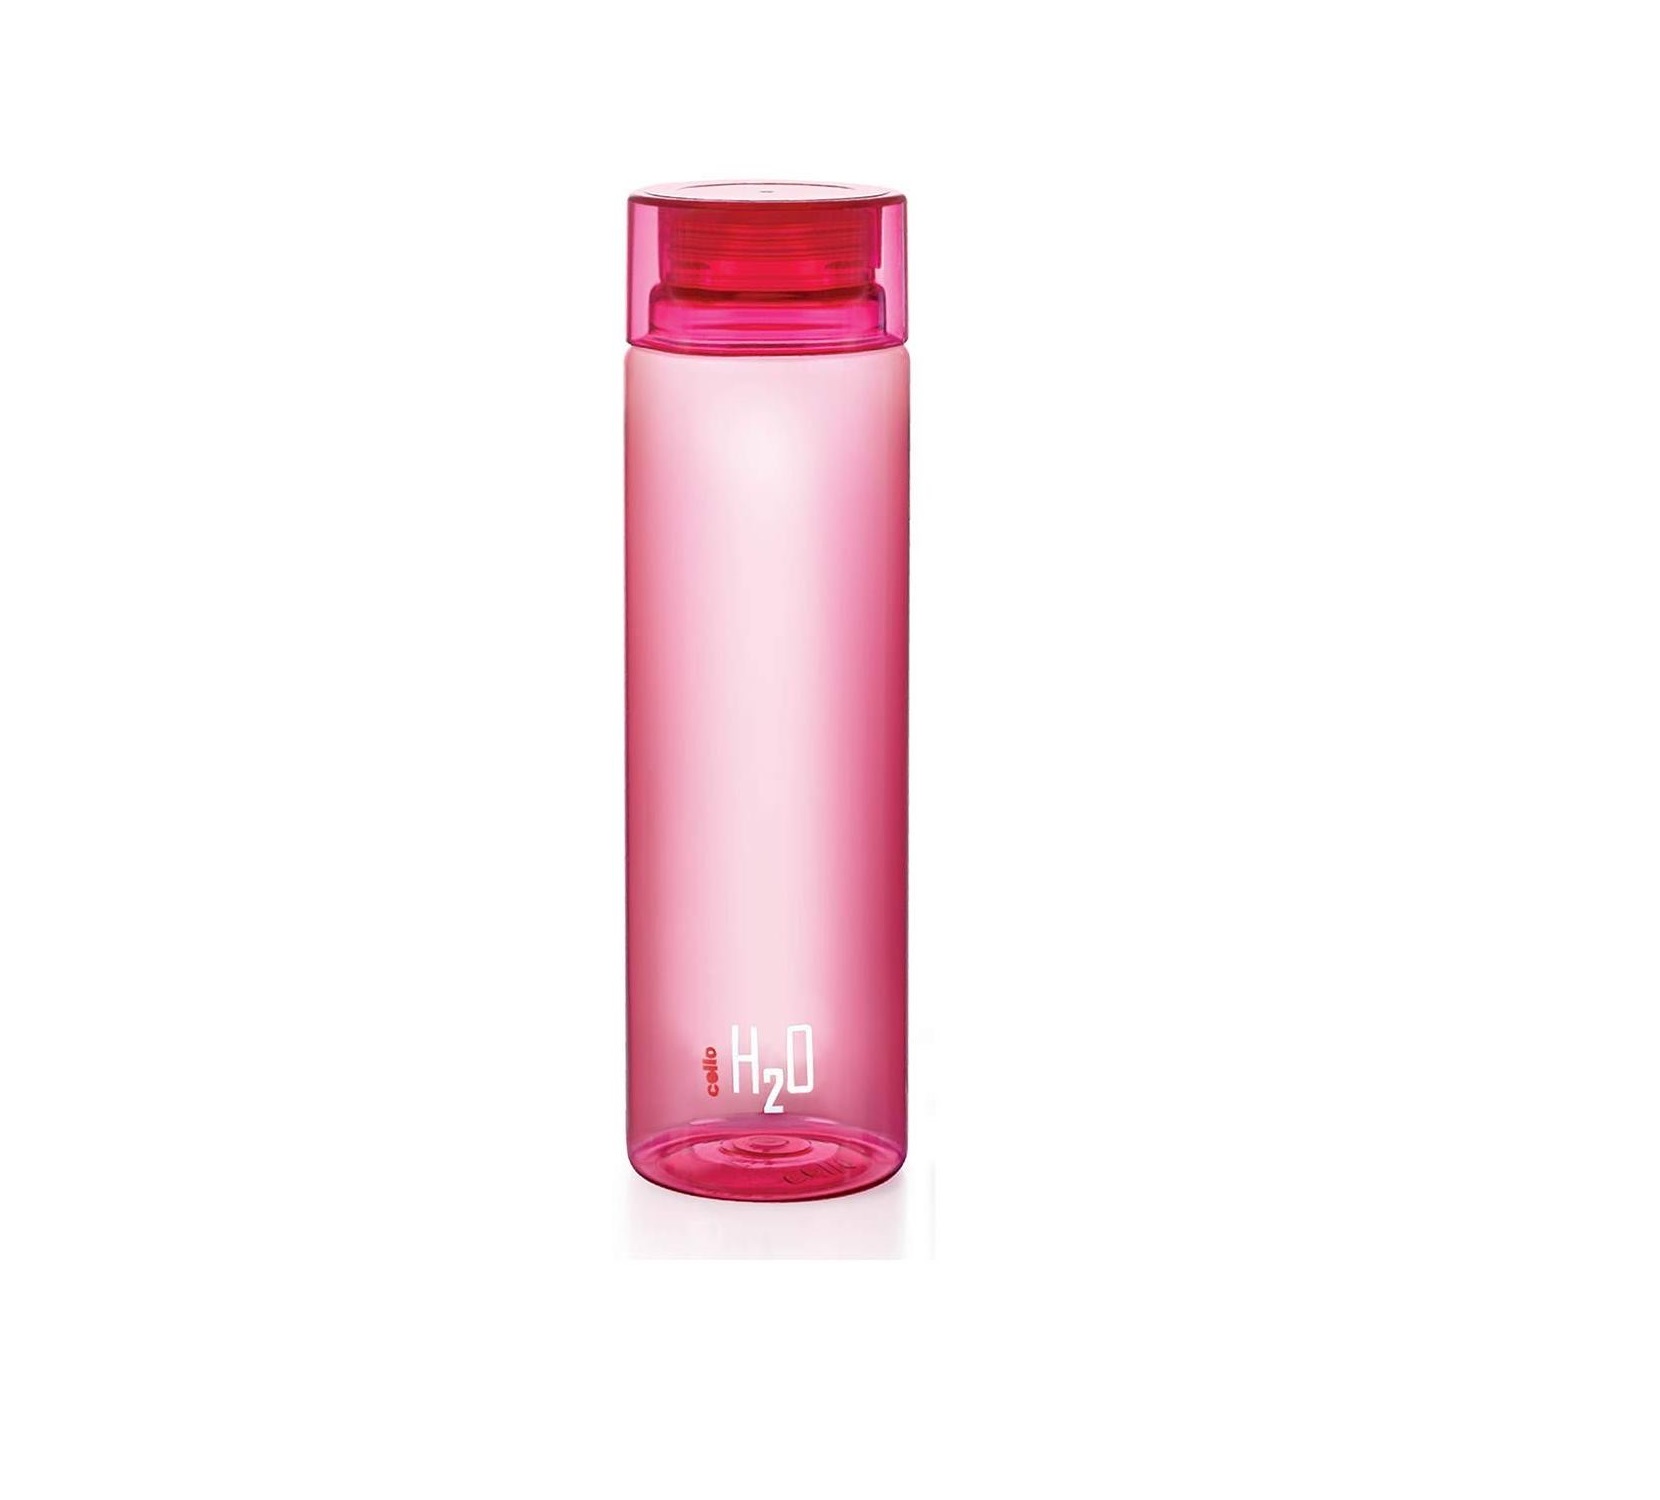 Cello H2O Premium Plastic Water Bottle (Red, 500ml)